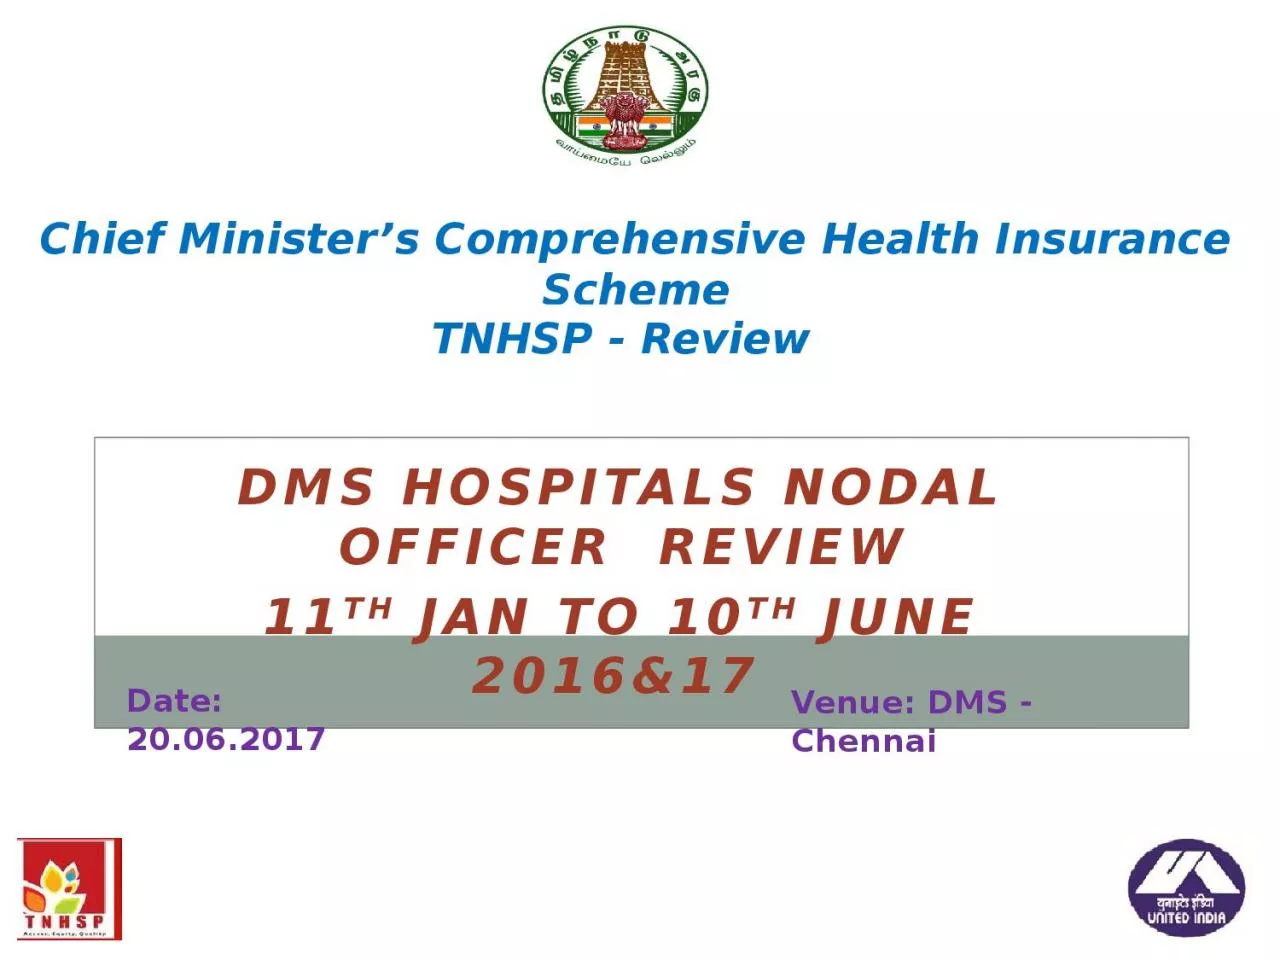 Chief Minister’s Comprehensive Health Insurance Scheme